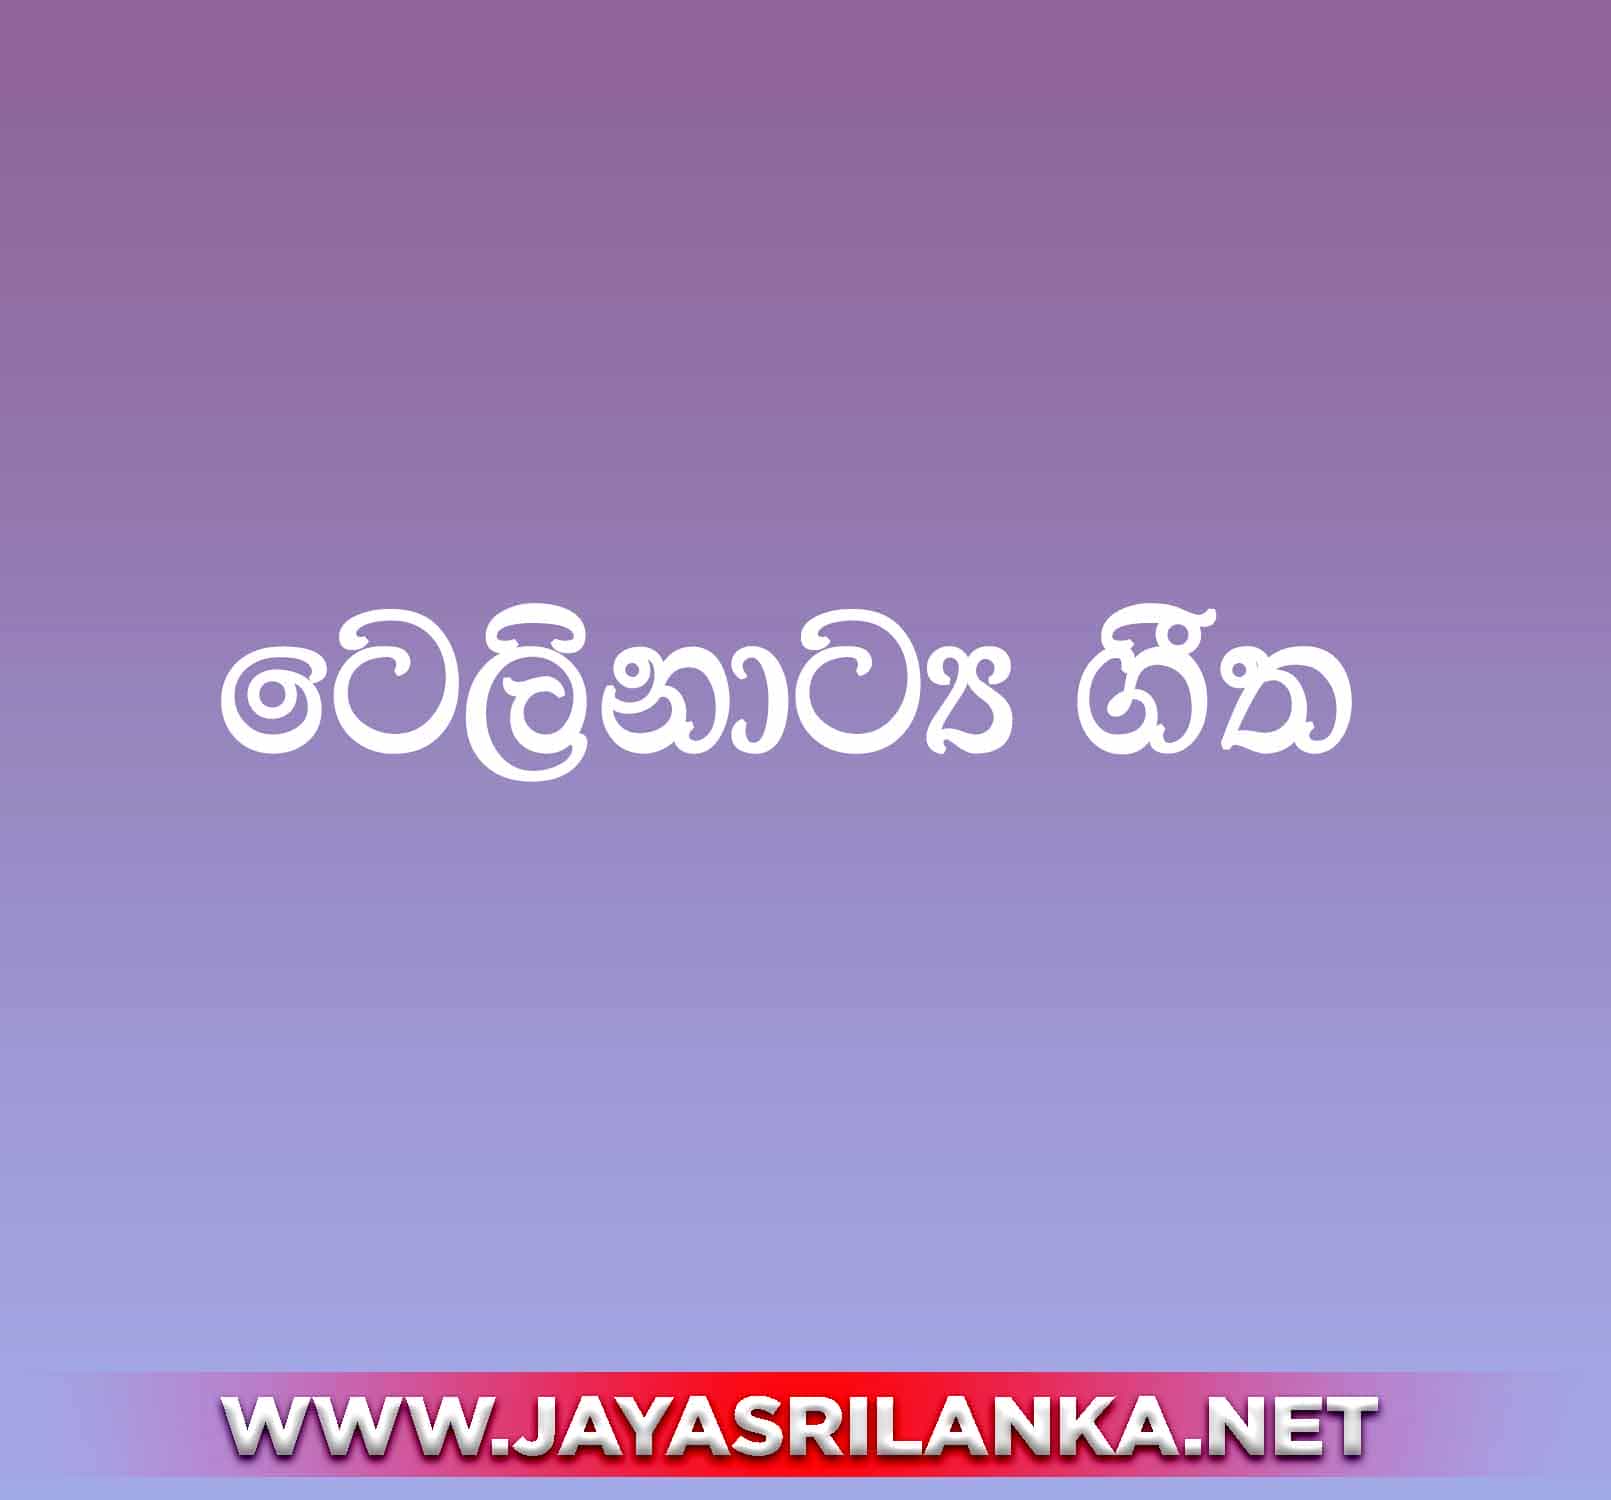 Dura Pena Tharu Heene - Sinhala Teledrama Songs mp3 Image